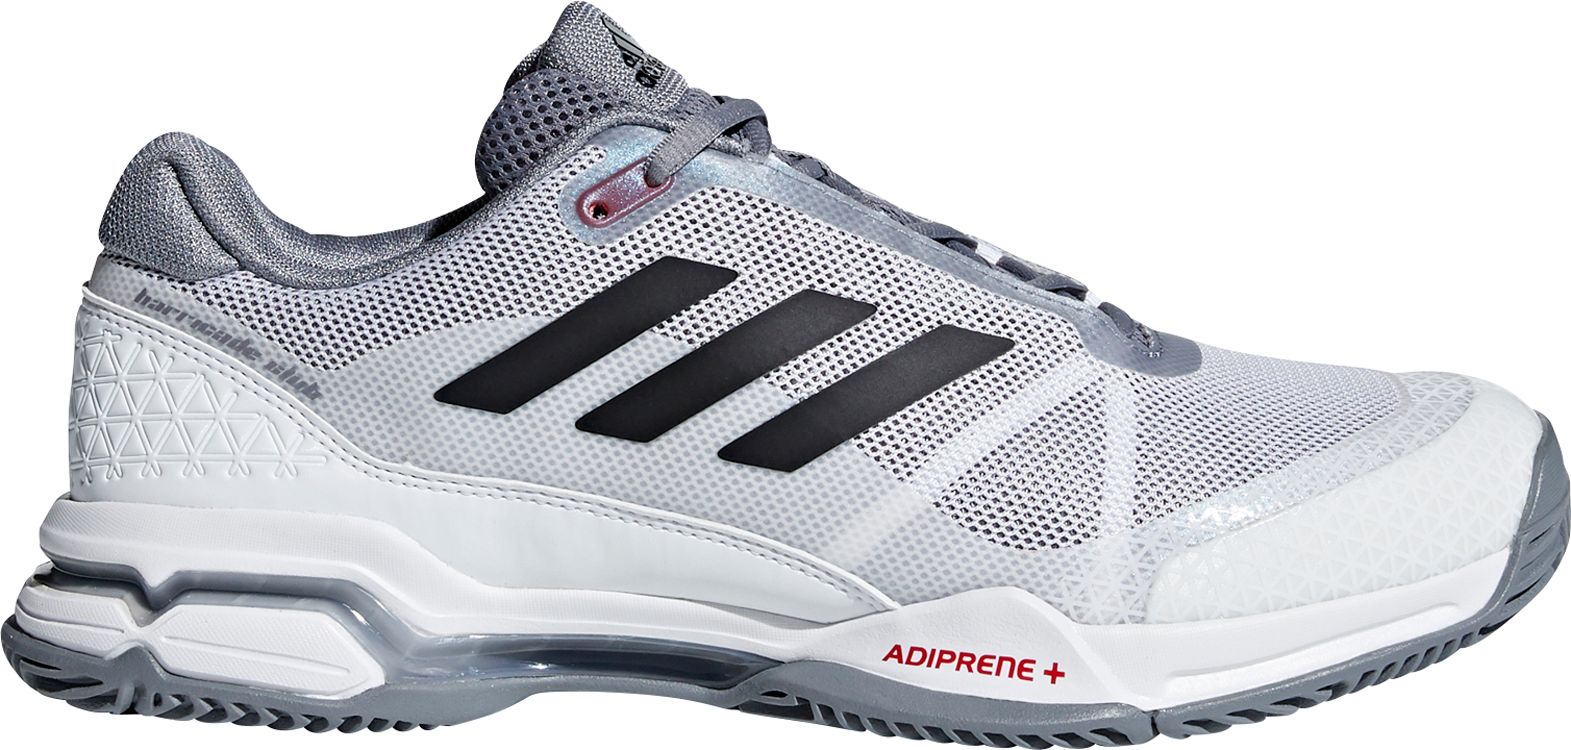 Adidas Adizero Feather 2 M Running Shoes Cheap Sale Silver Mens Black